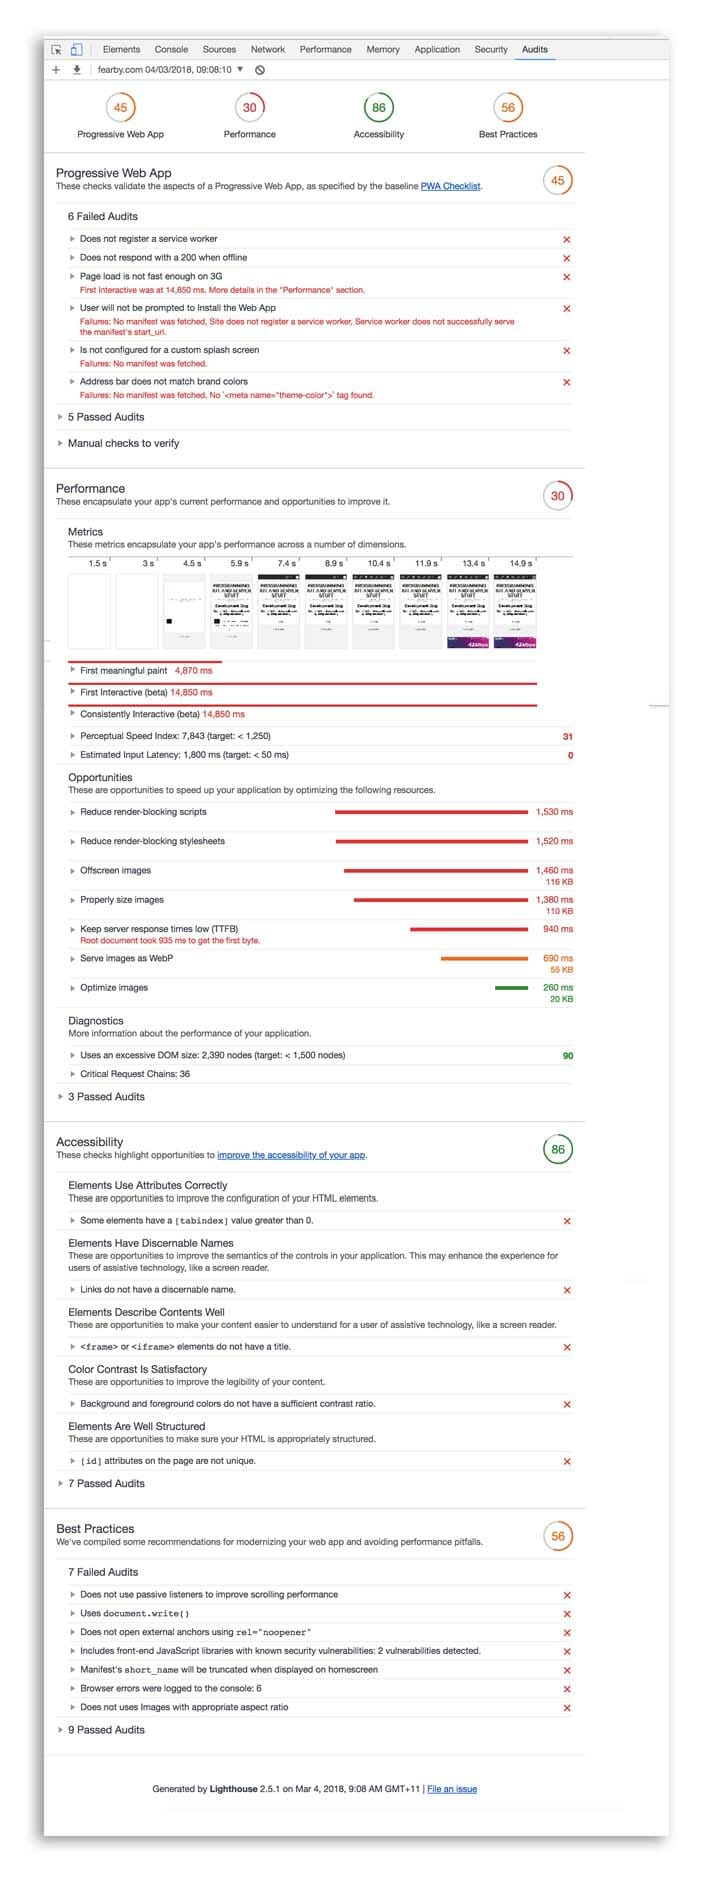 Chrome 64 Audit Results